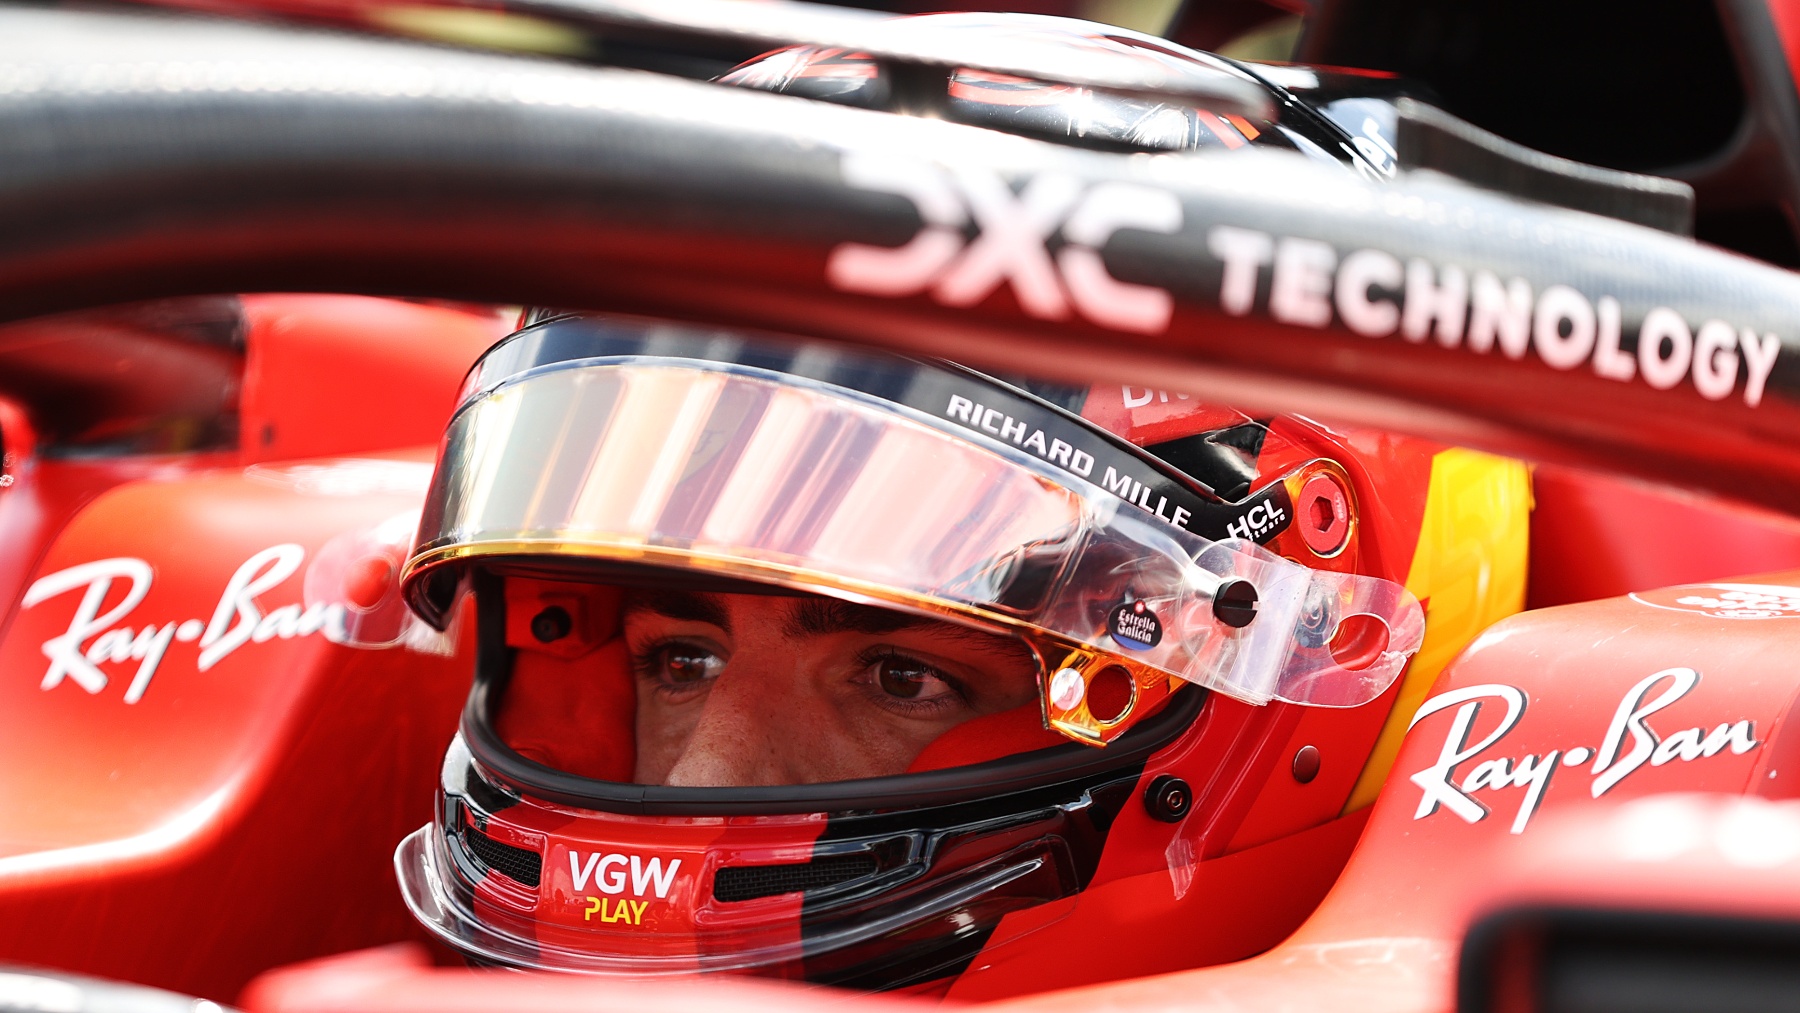 Carlos Sainz, piloto de Ferrari. (Getty)